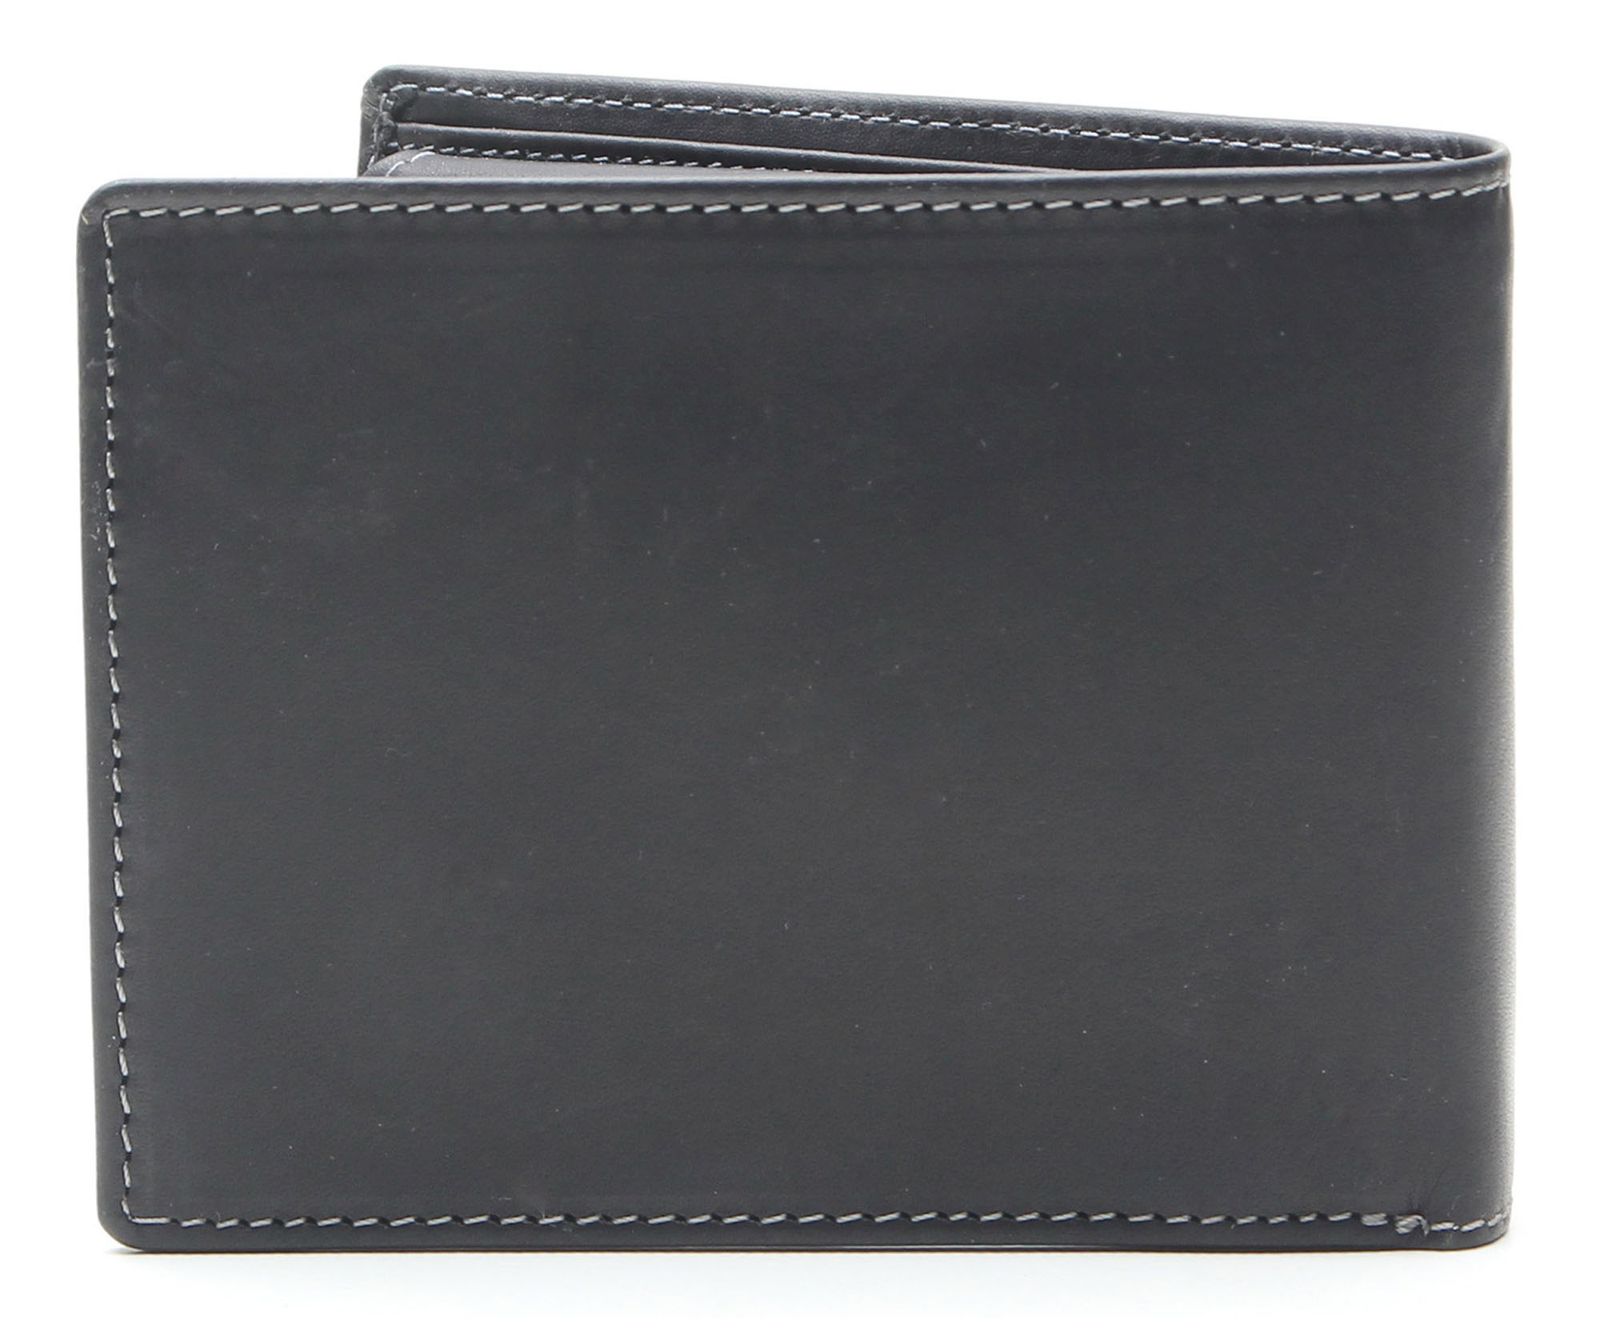 Esquire purse Wallet Horizontal Classic Black | Buy bags, purses ...